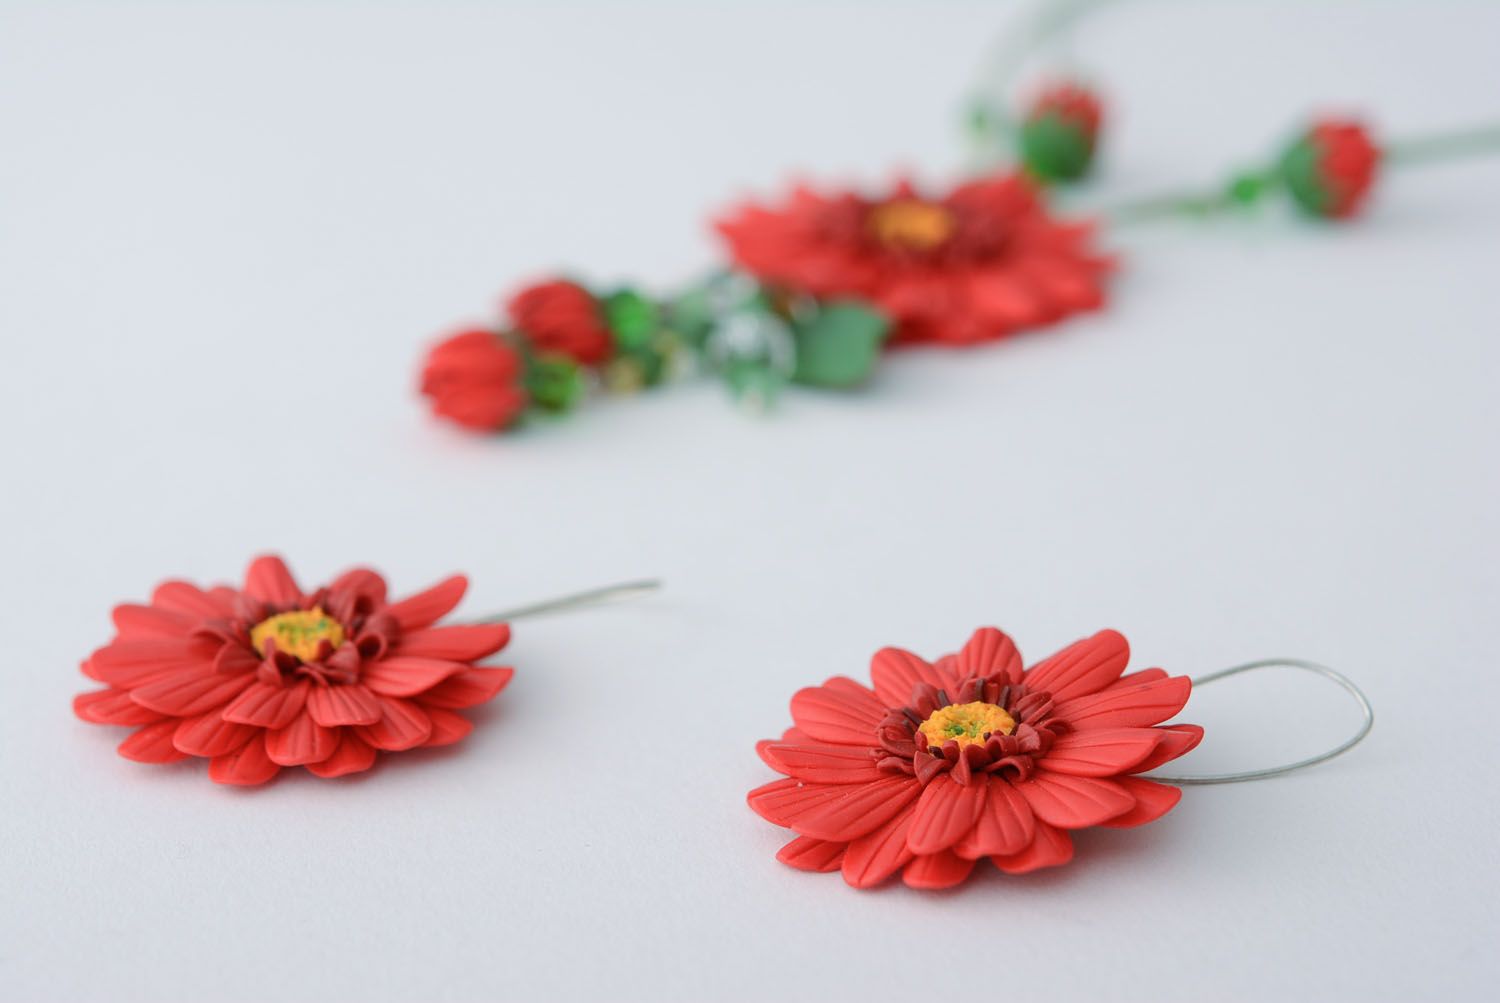 Flower pendant and earrings photo 5